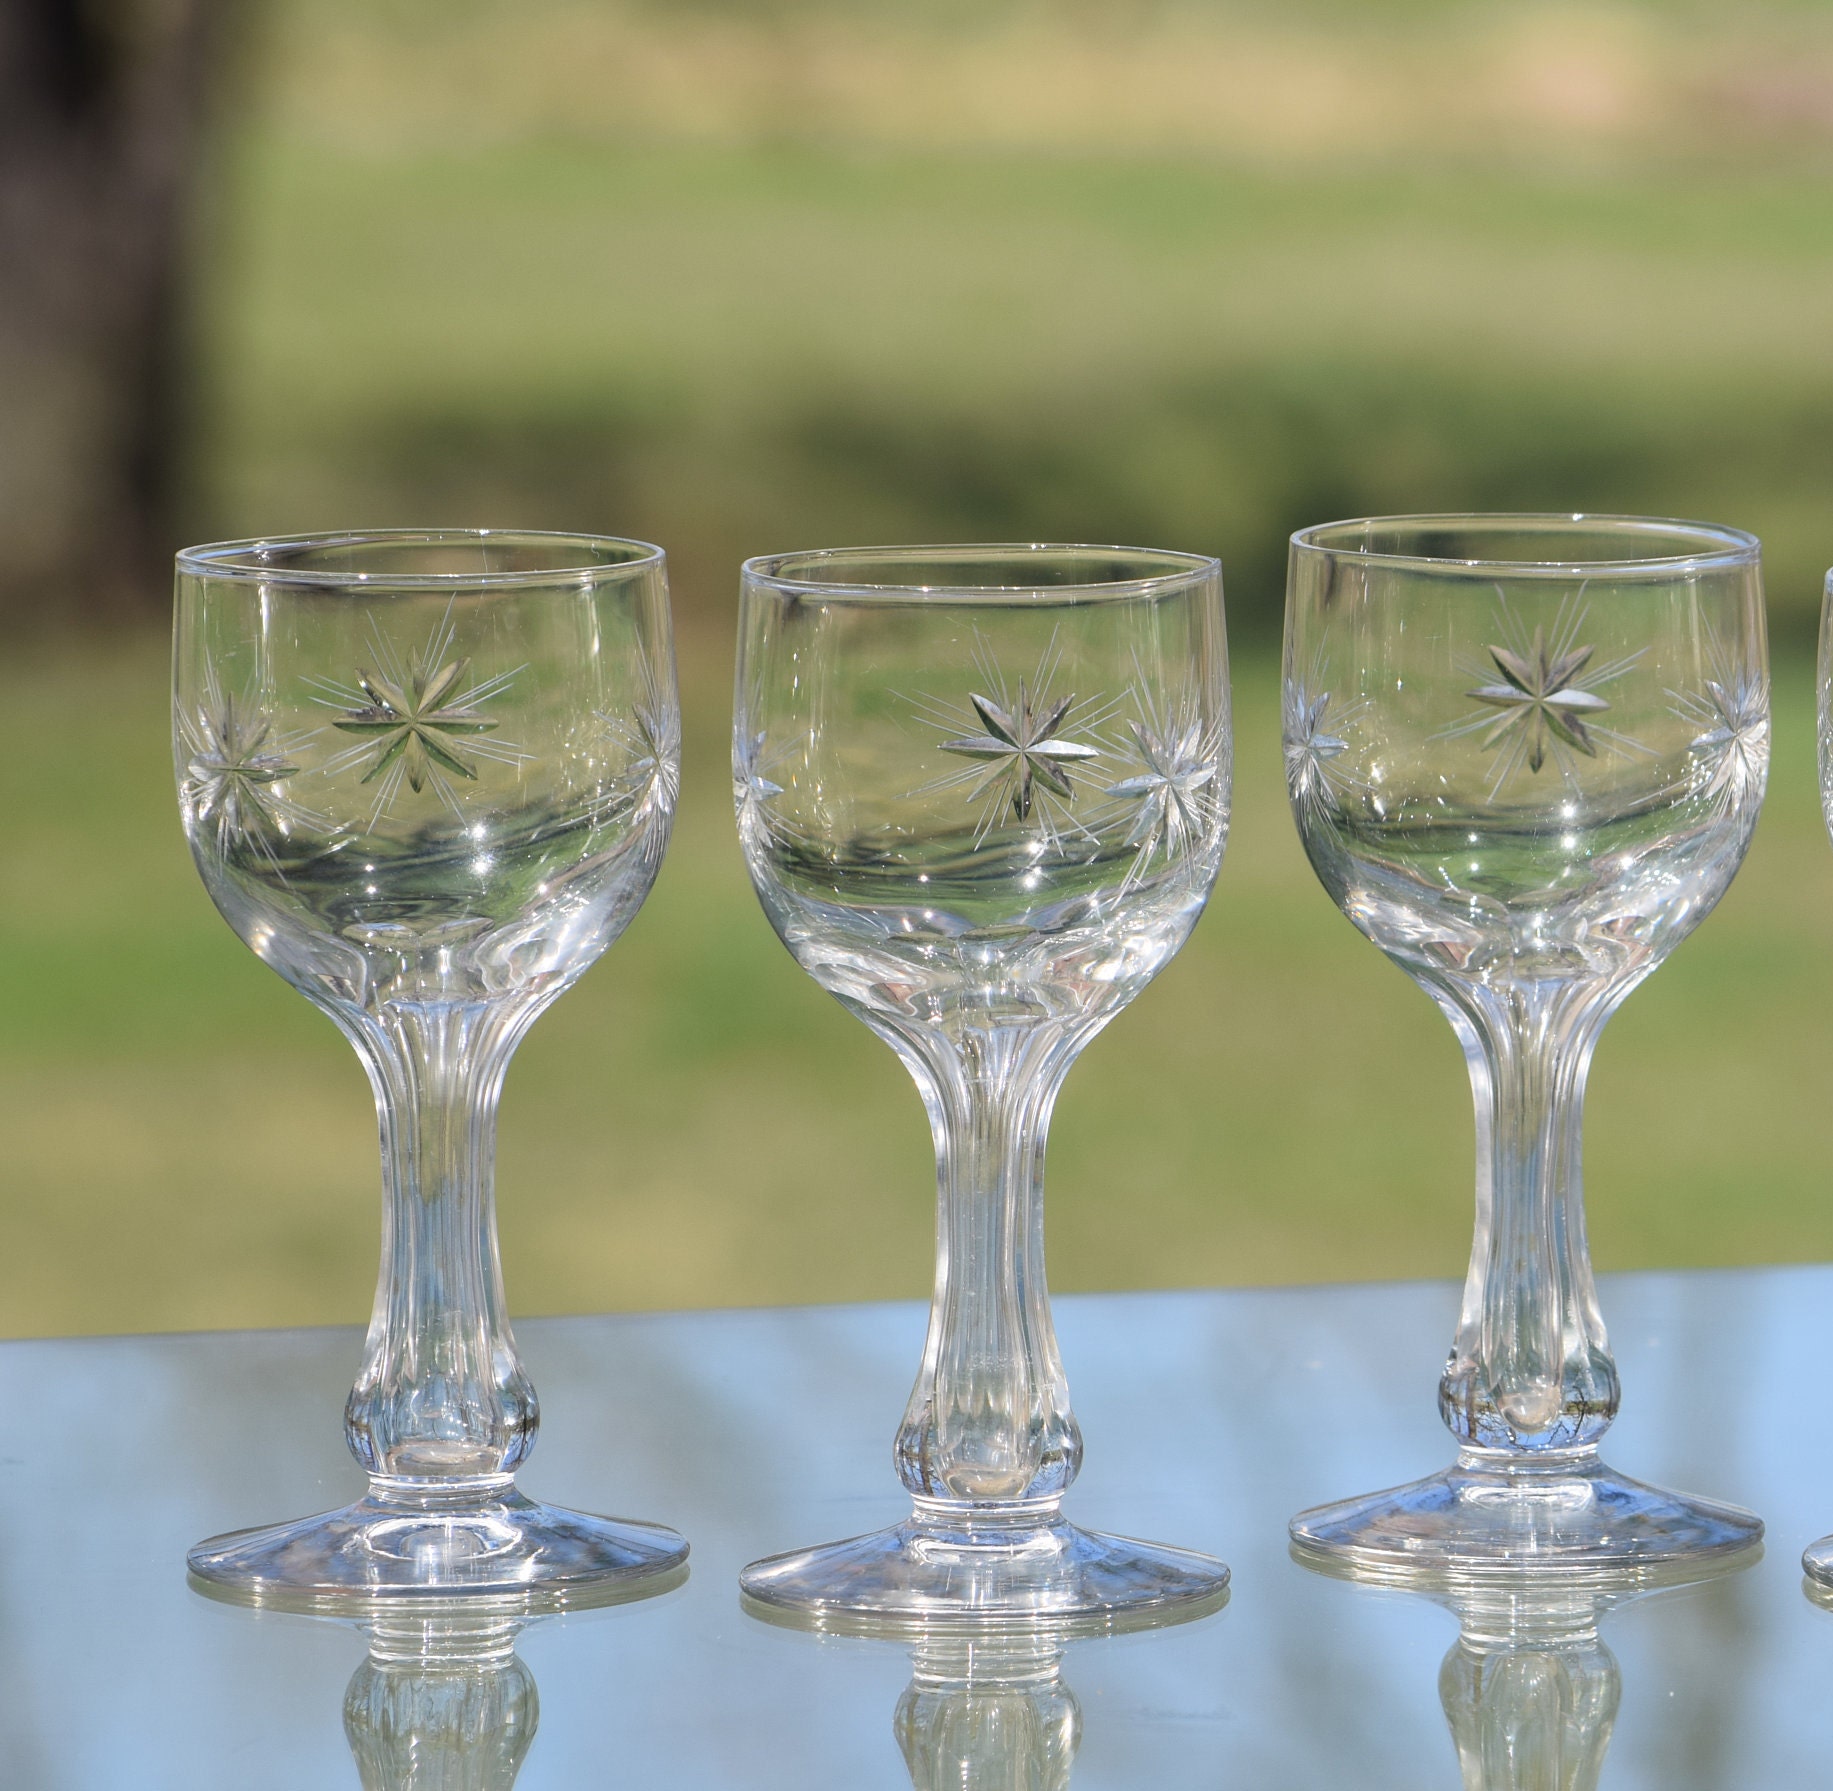 Starburst Wine Glasses, Hand-Painted Italian Crystal Goblets, Set of 2